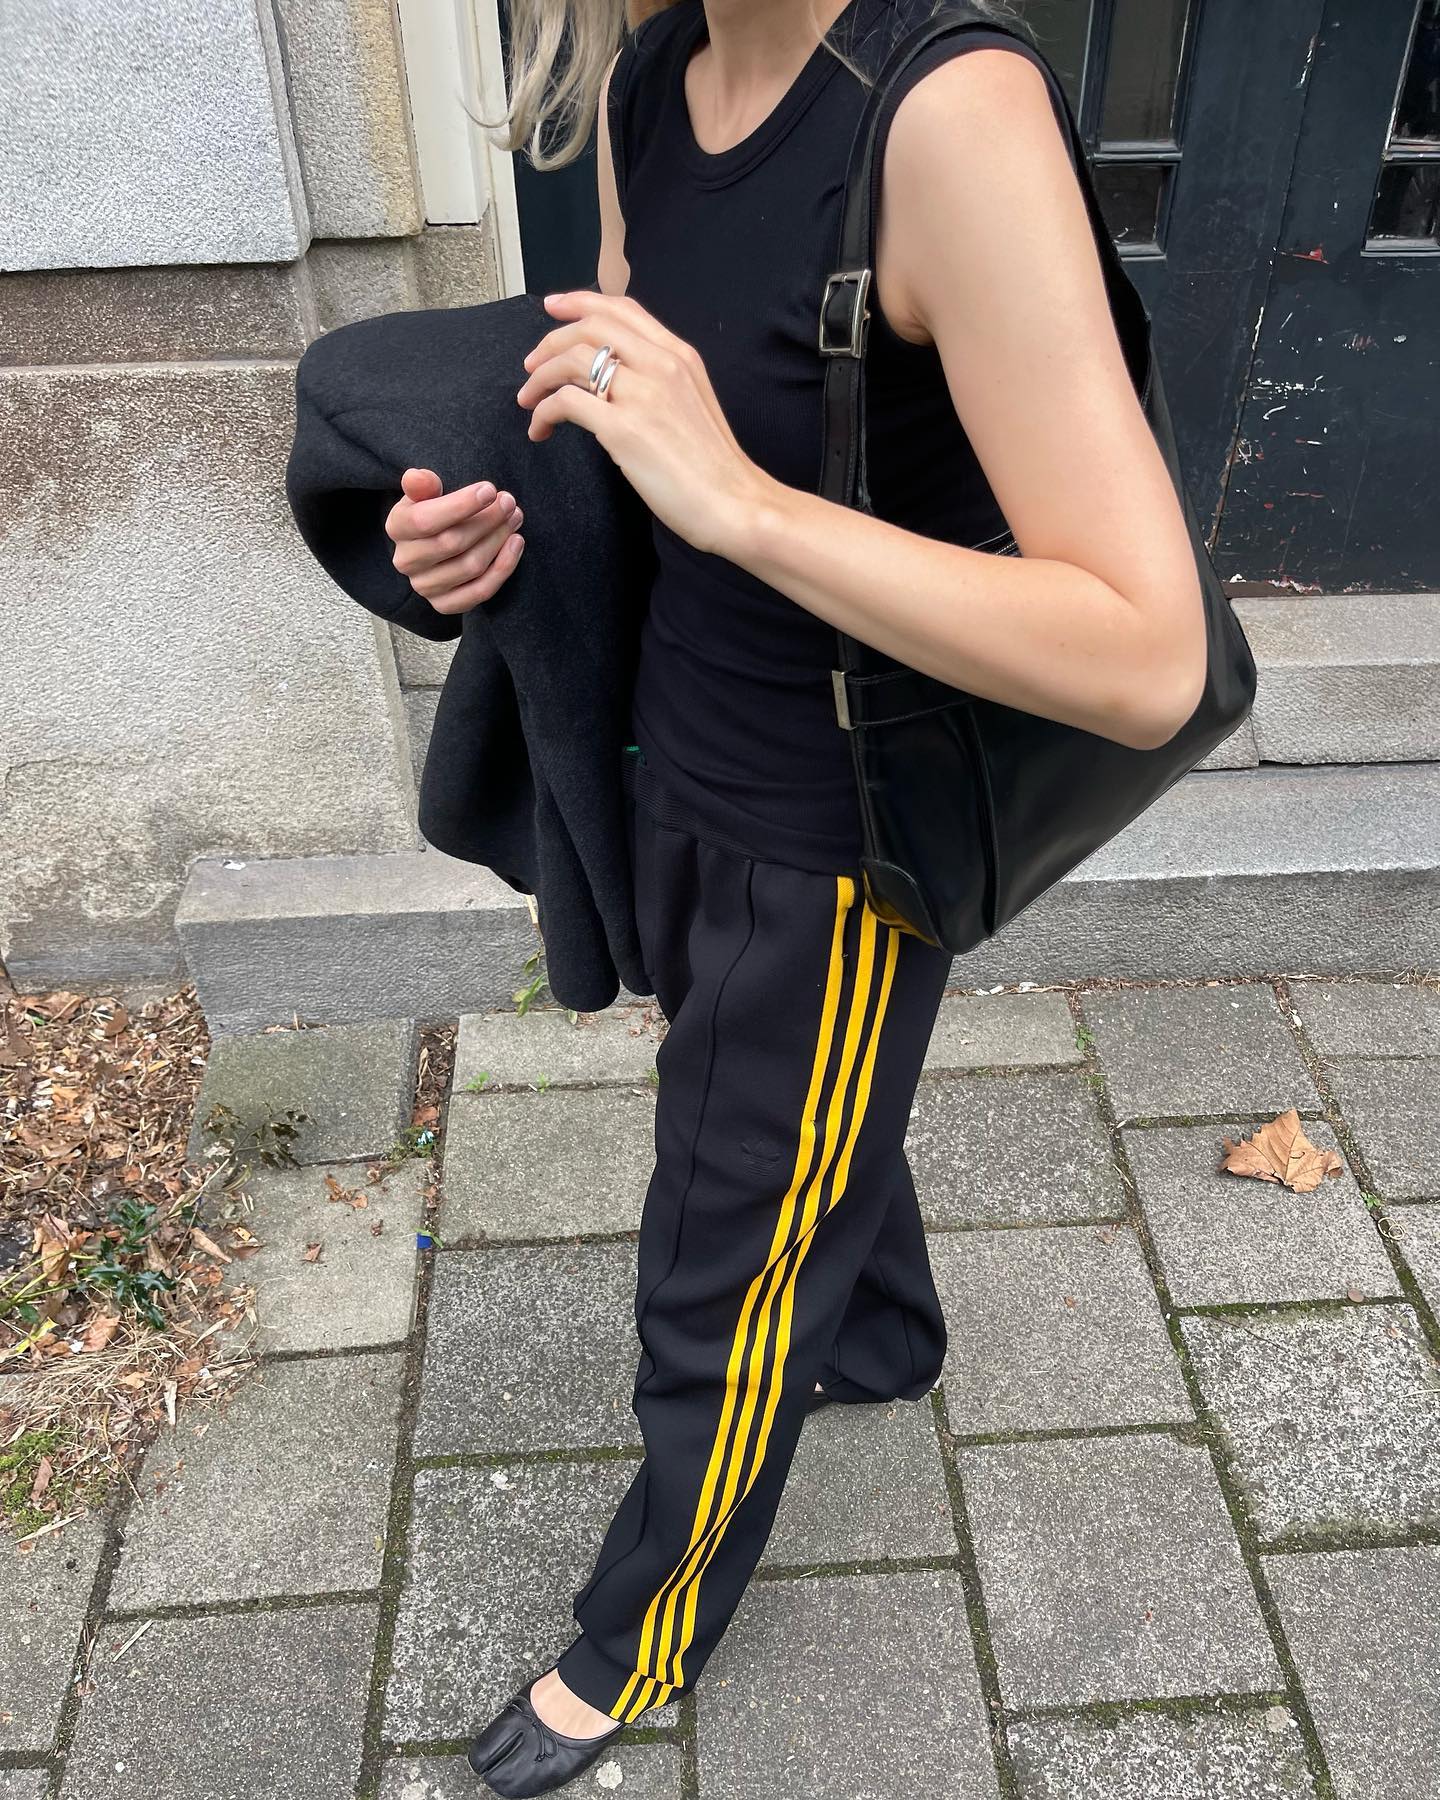 Dutch style influencer Stephanie Broek walking on the sidewalk wearing a black tank top, black Adidas track pants with yellow stripes, and black Margiela ballet flats